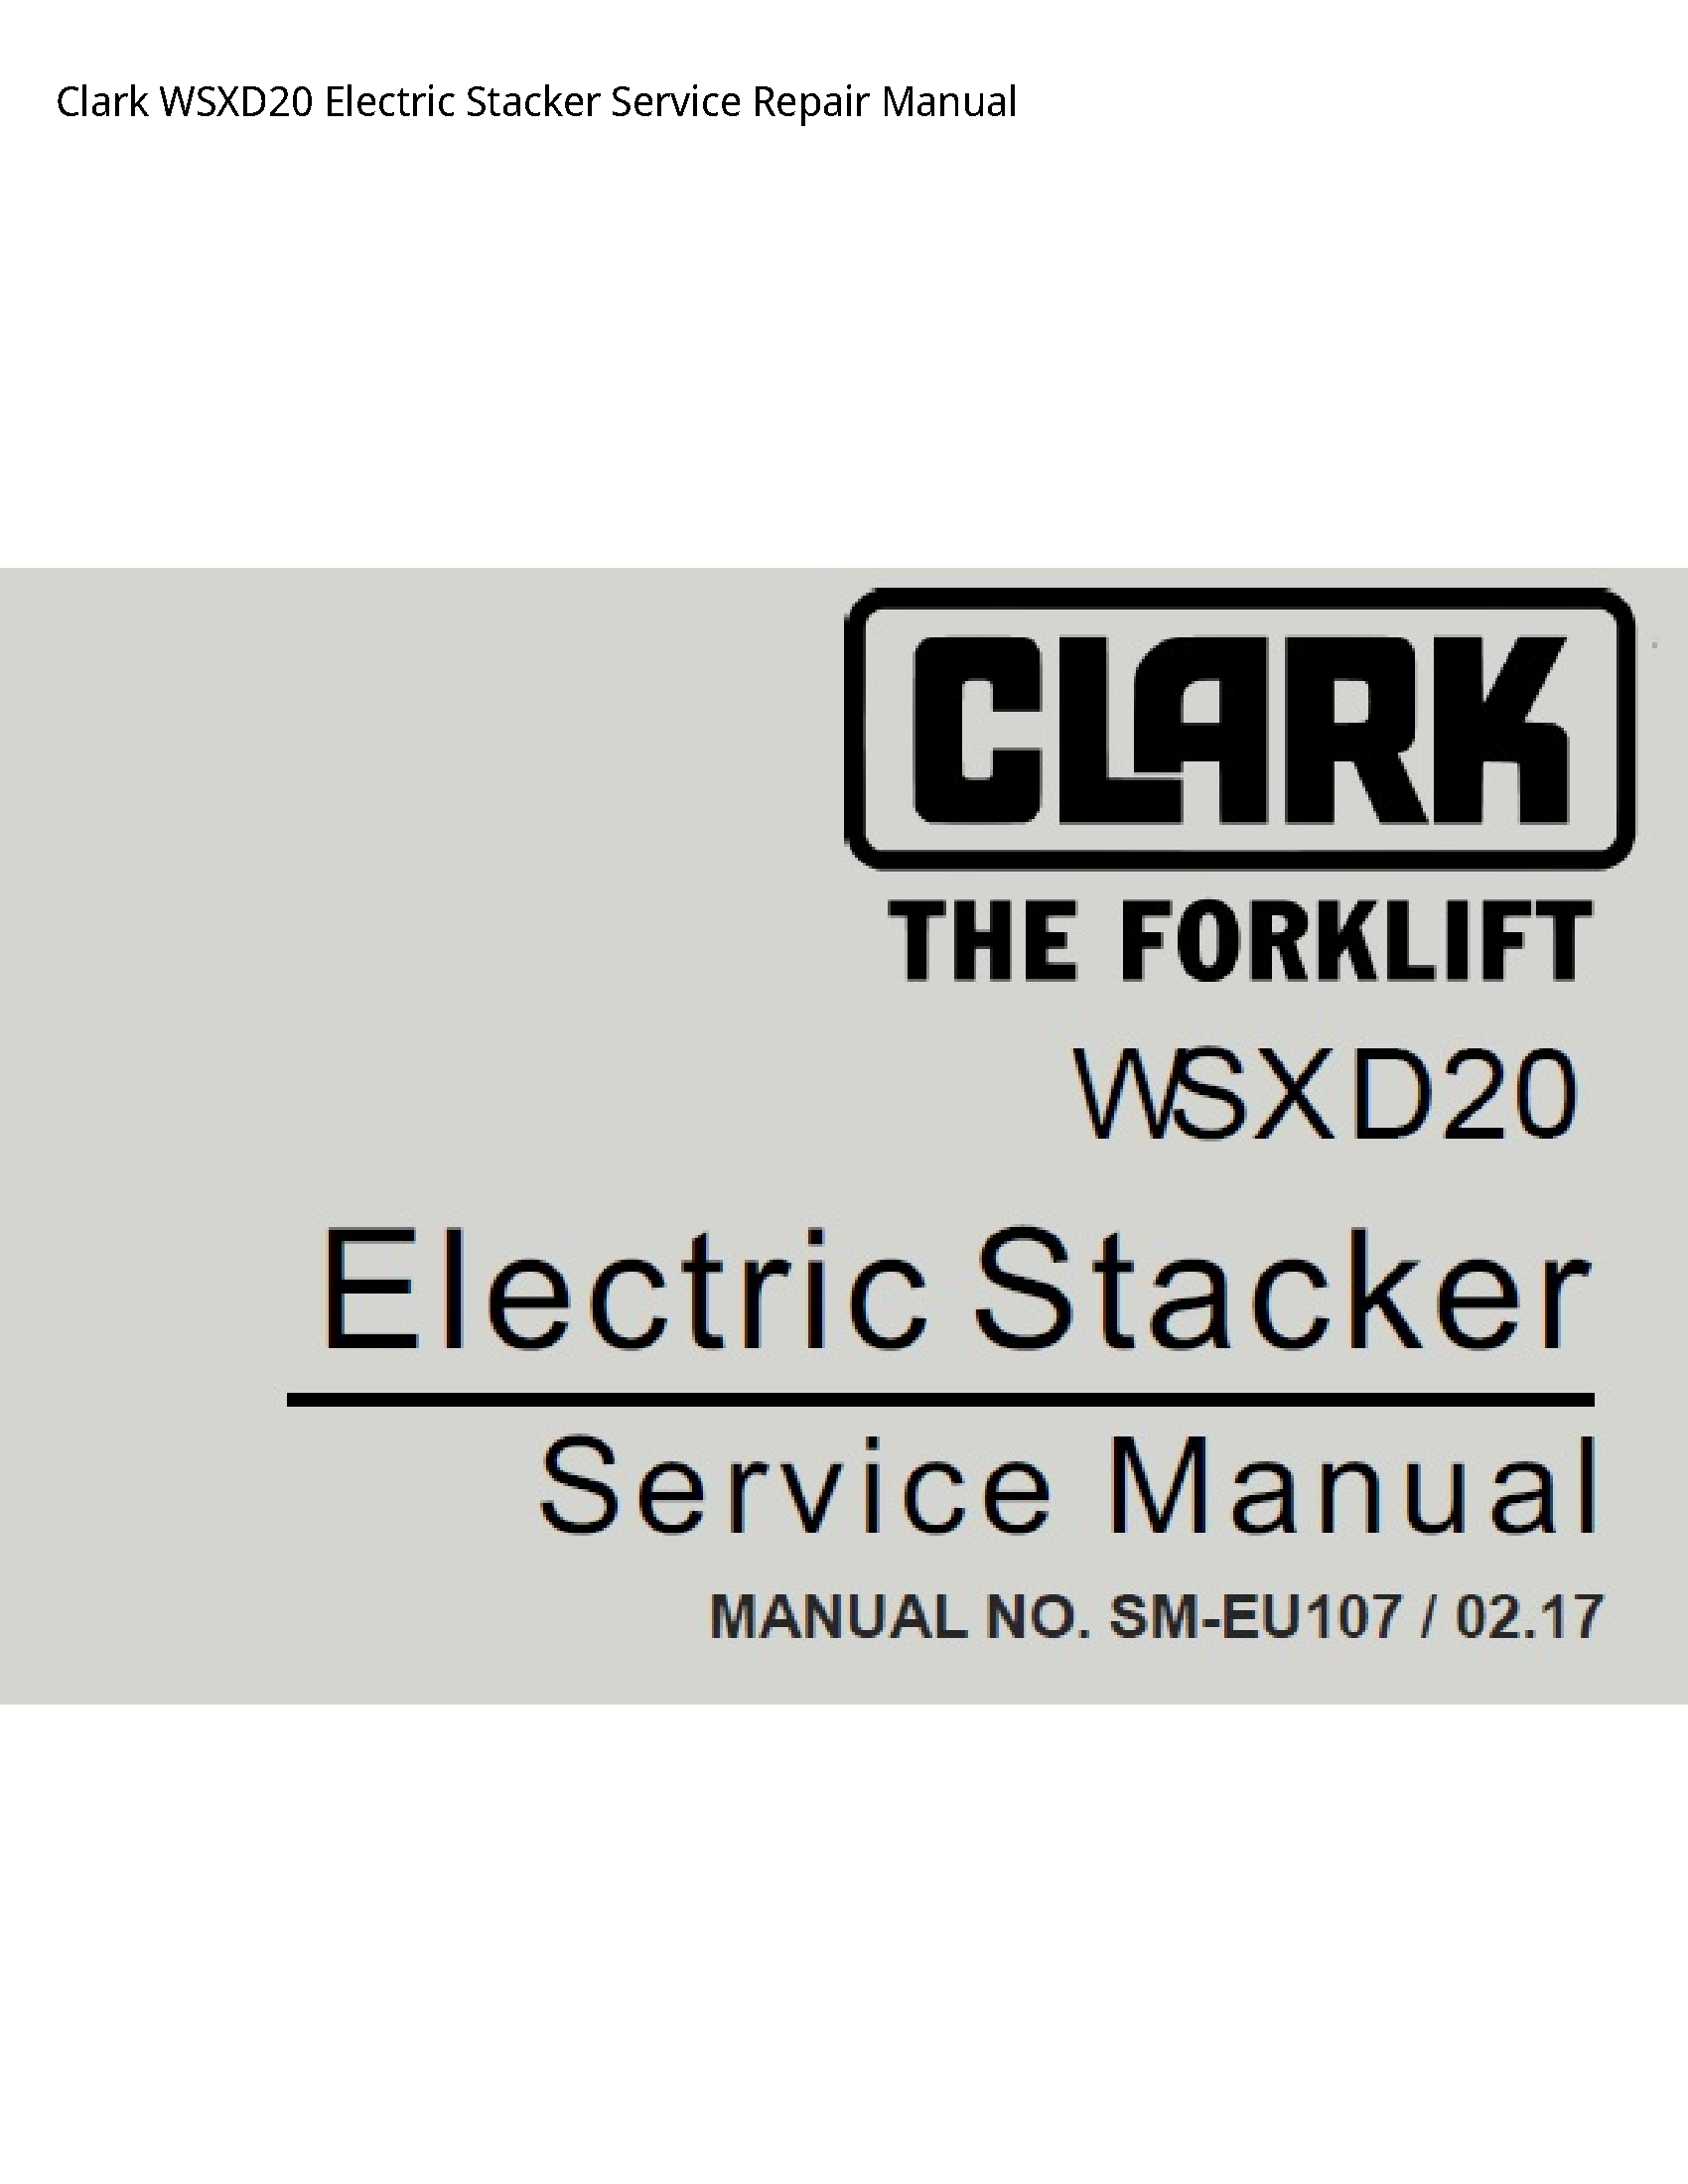 Clark WSXD20 Electric Stacker manual